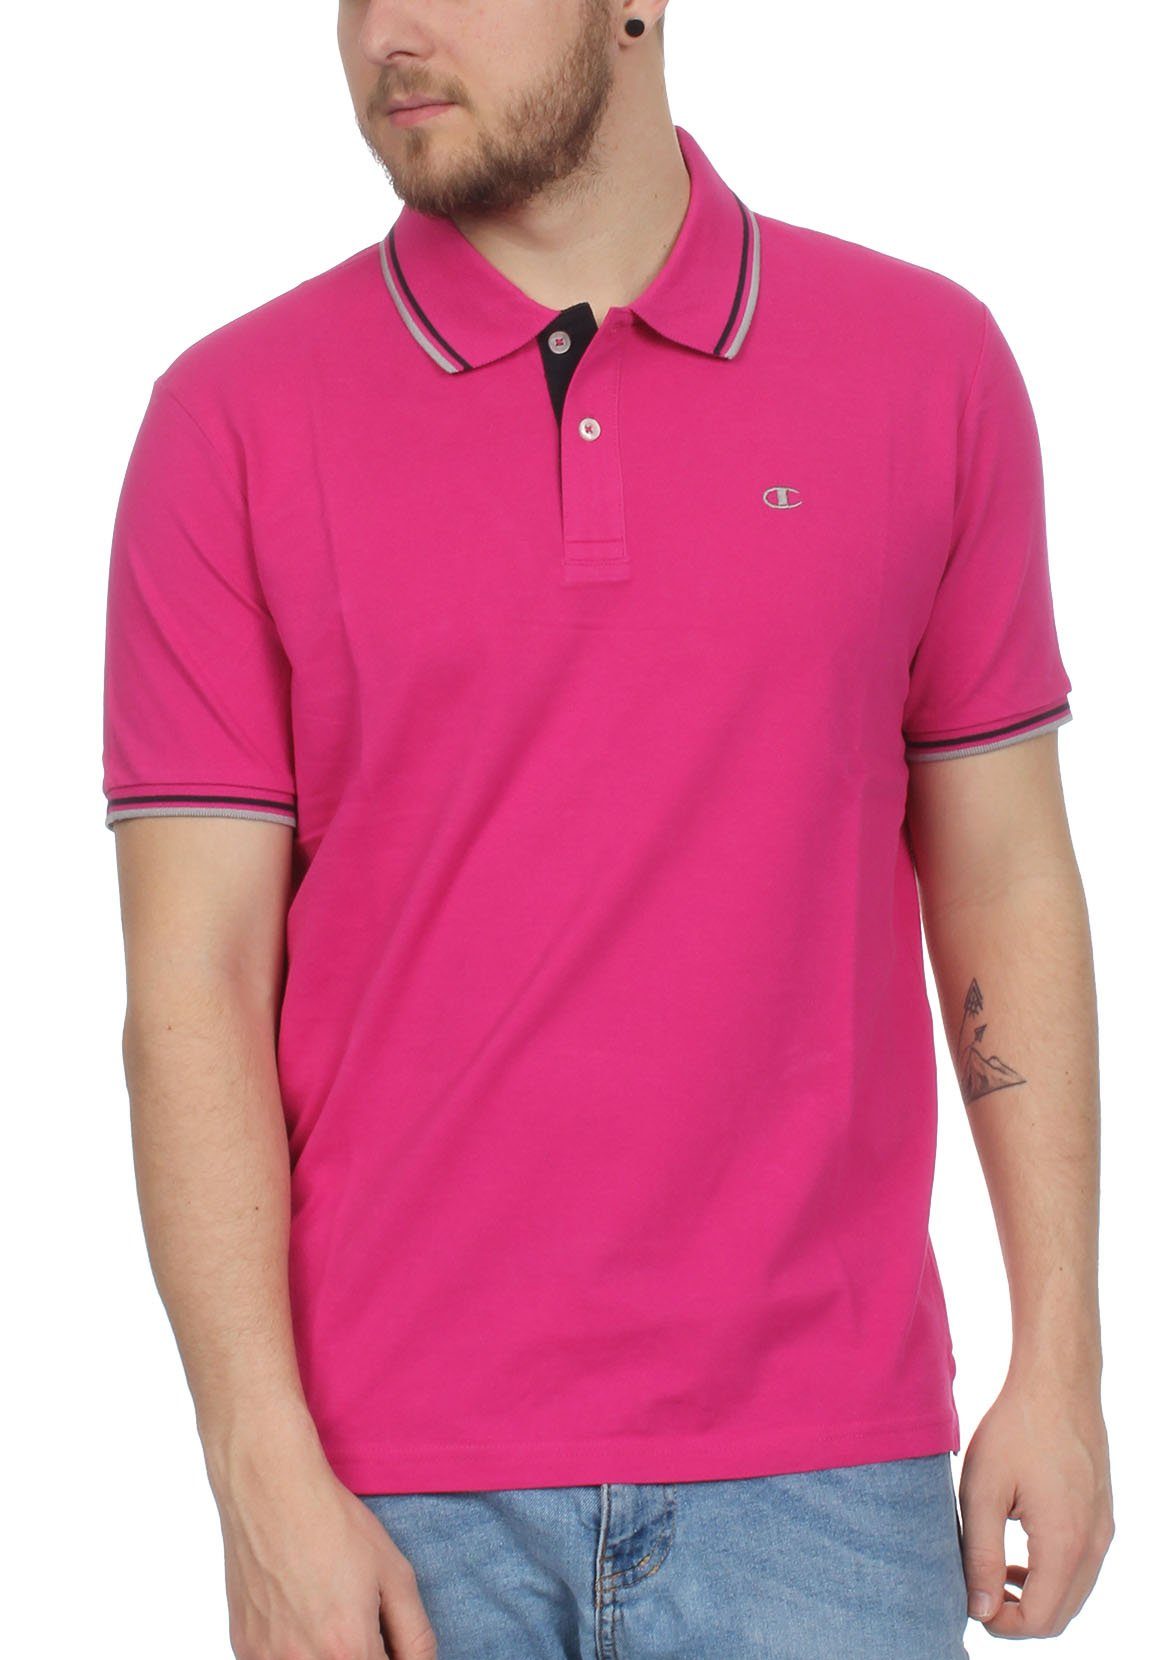 Champion Authletic Herren 211847 pink Poloshirt Champion Poloshirt S21